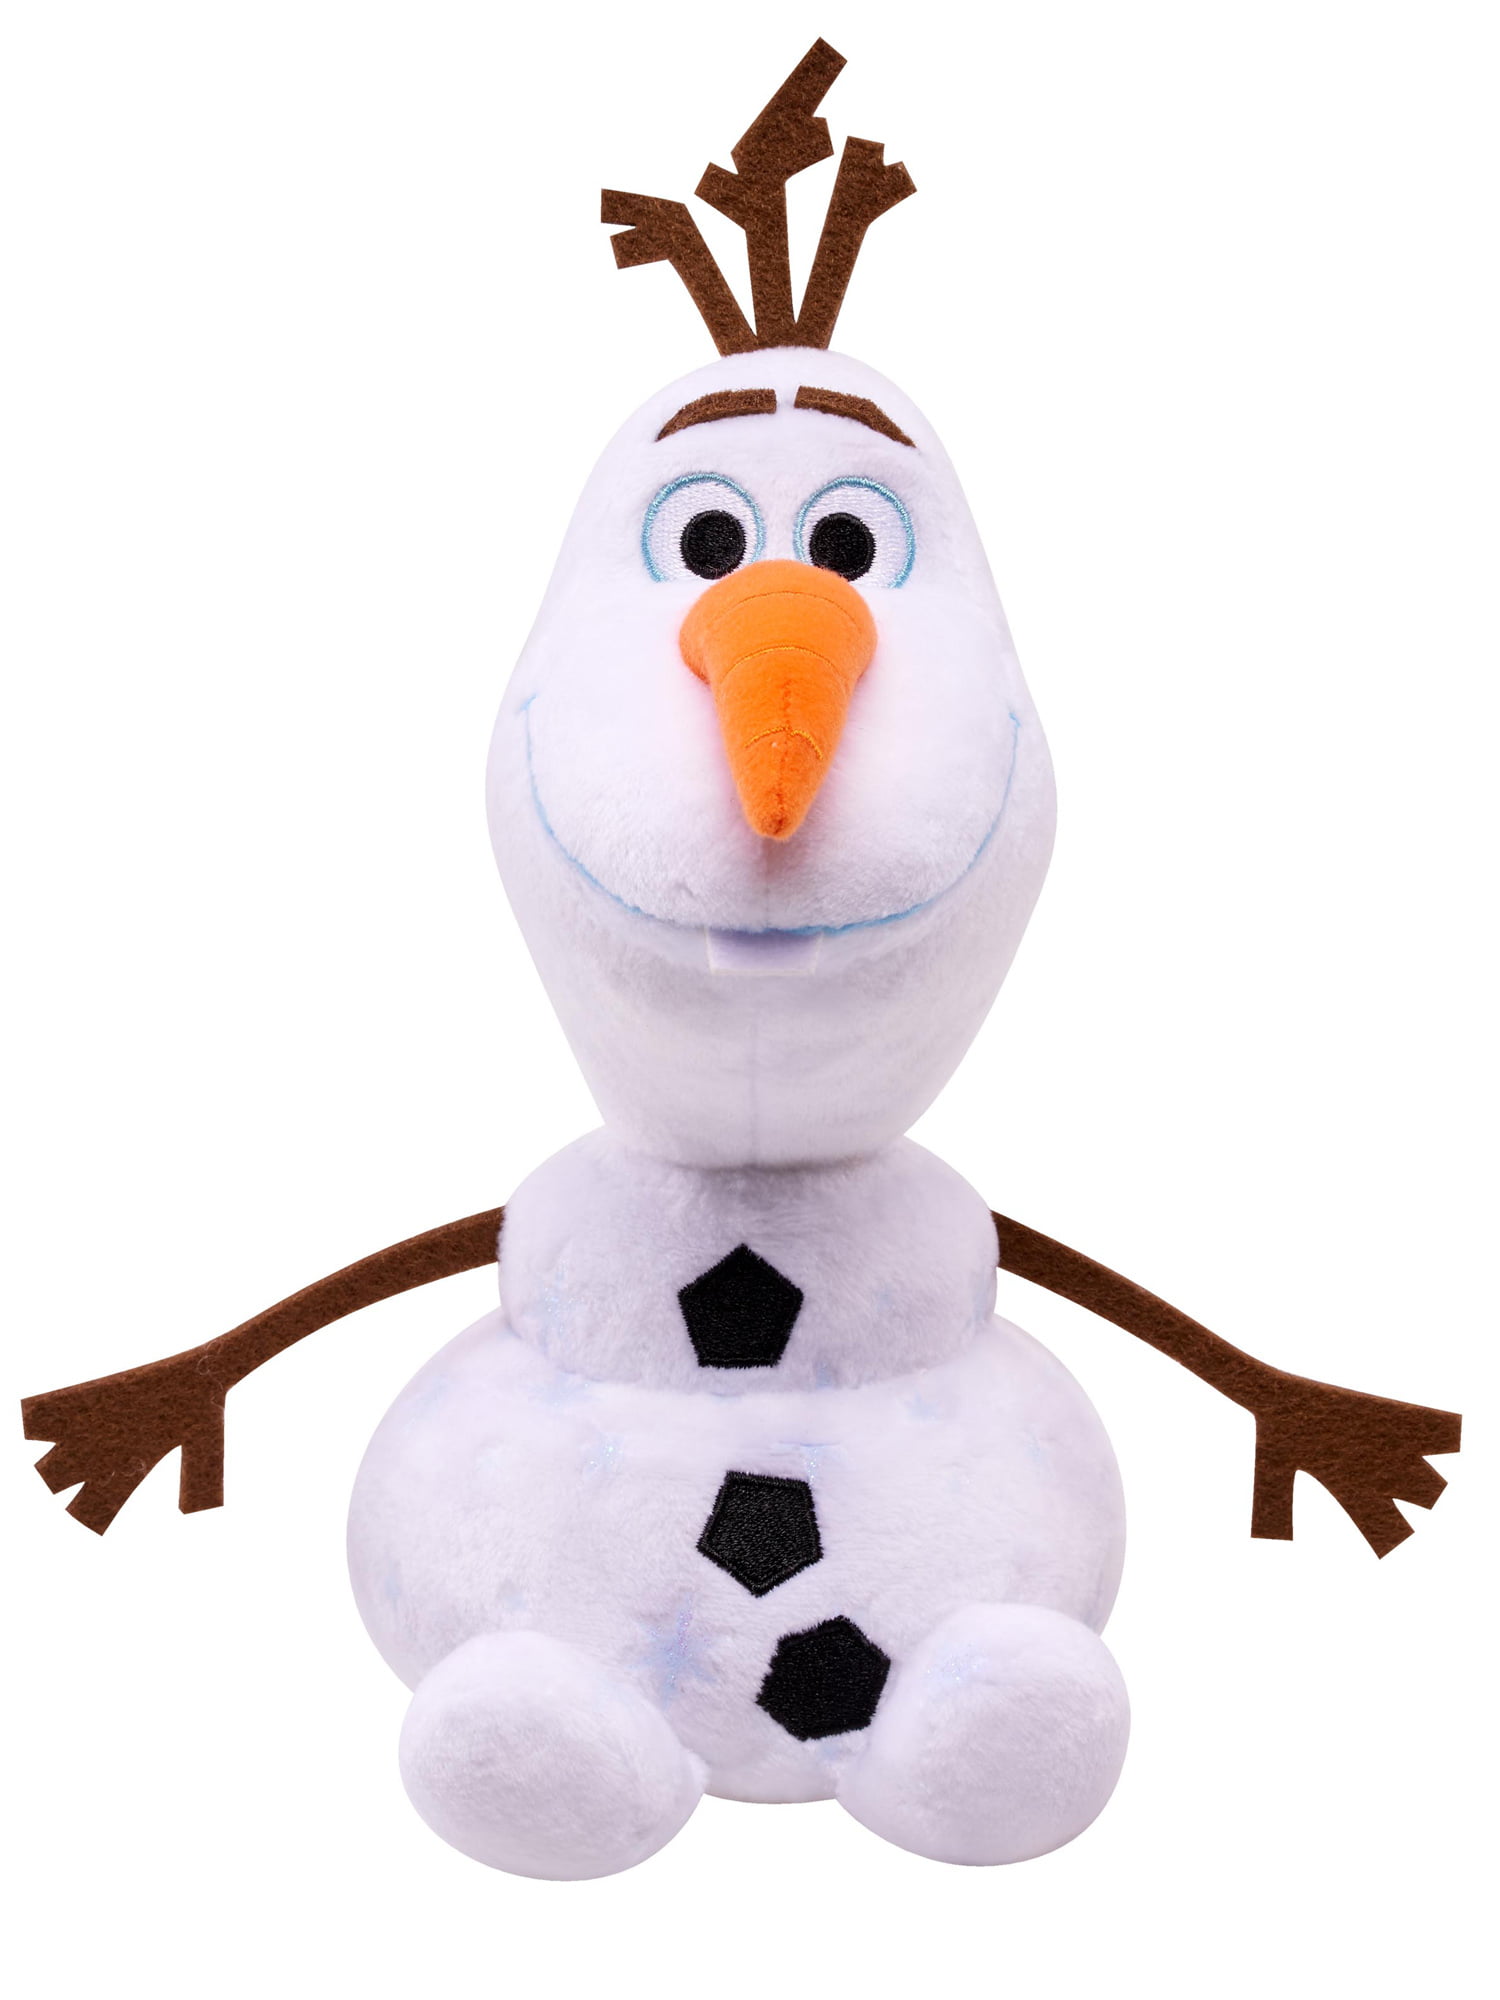 Disney Frozen Olaf Snowman 15in Super Soft Stuffed Plush Childrens Toy for sale online